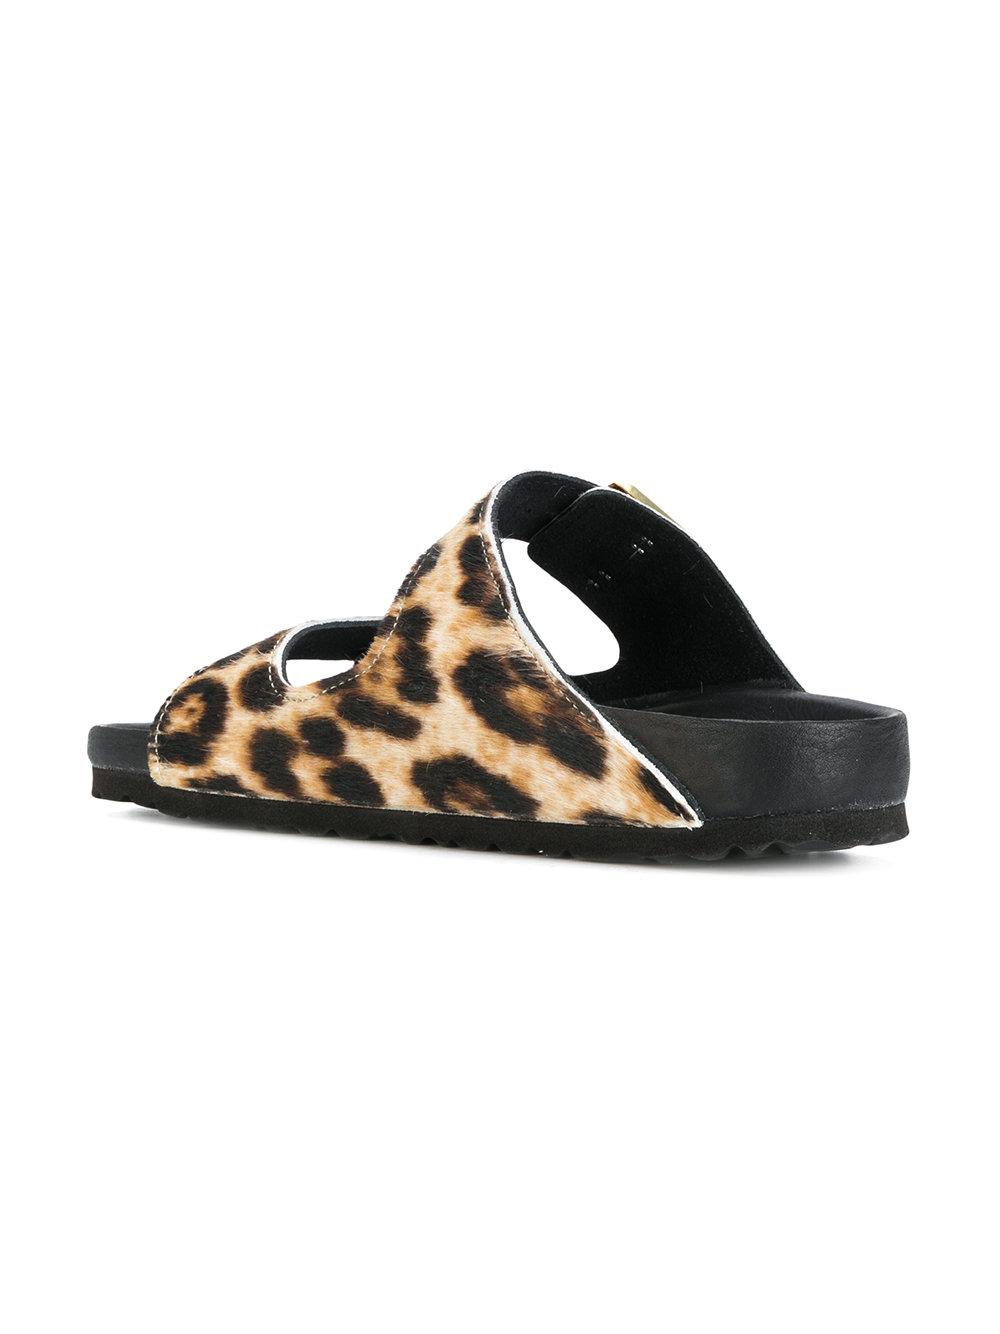 cheetah birkenstock style sandals